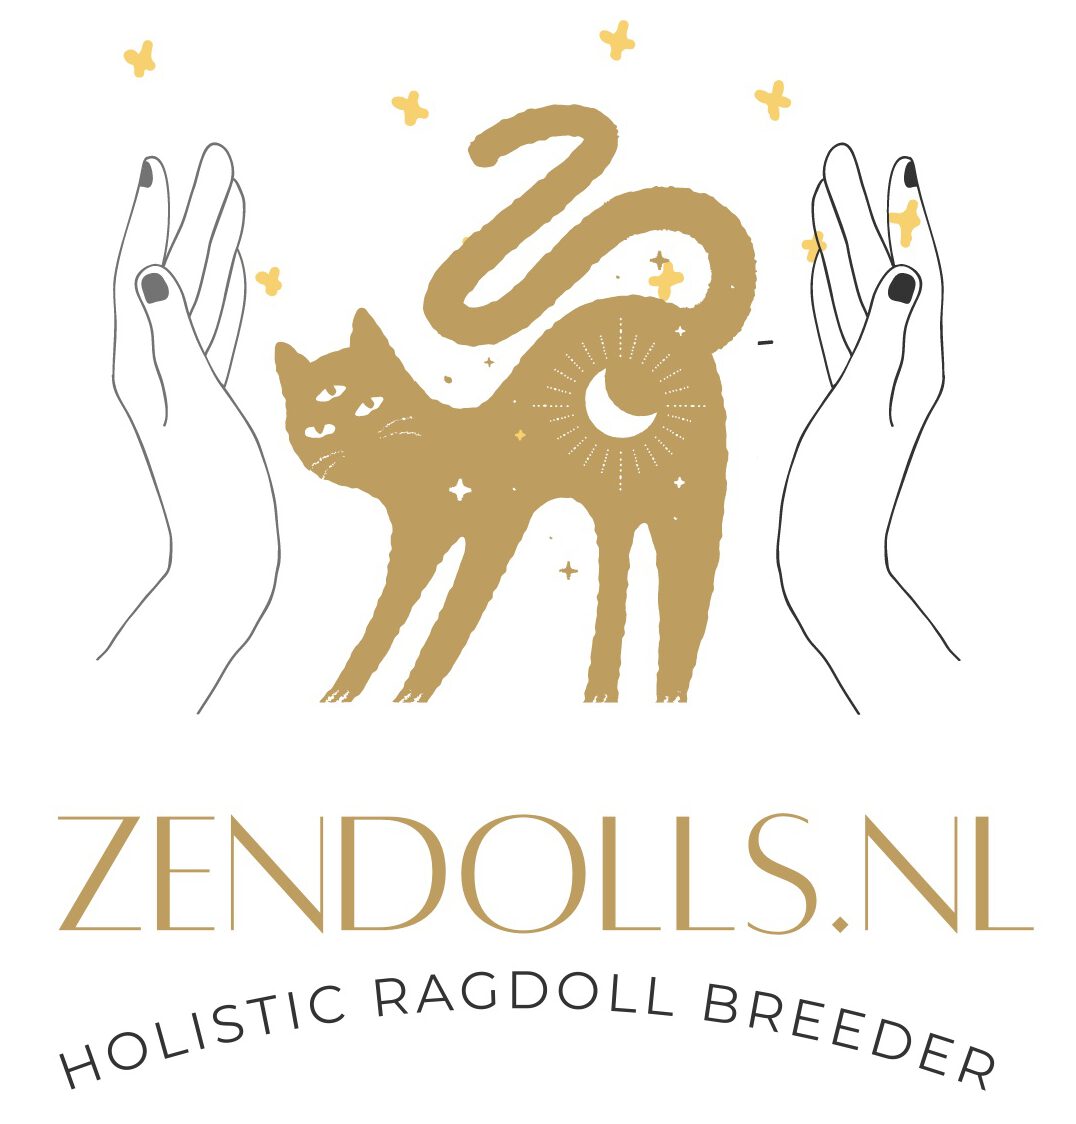 www.zendolls.nl